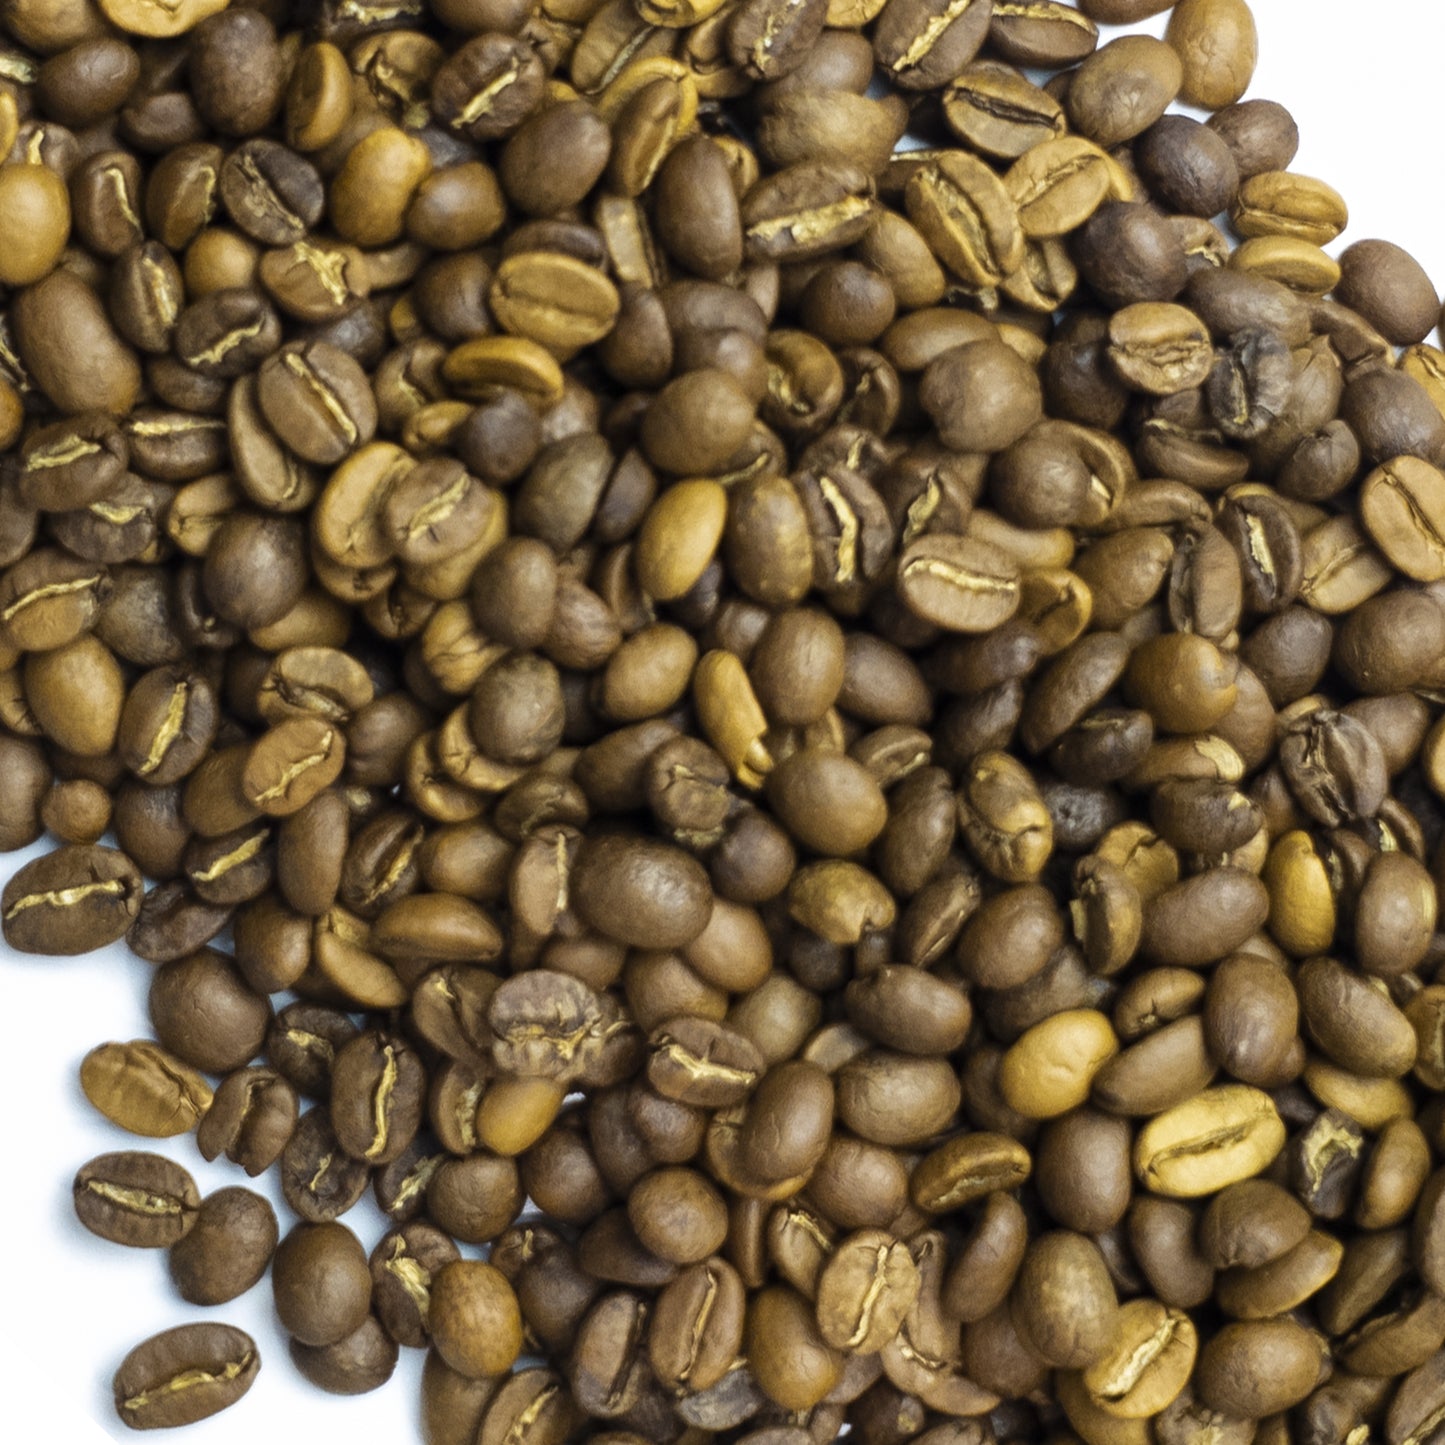 
                  
                    Twist | Ground Coffee | Light/Medium Roast | Rose Rock Coffee | Air Roasted | 10oz | 12oz | 1lb | 5lb | Sample
                  
                